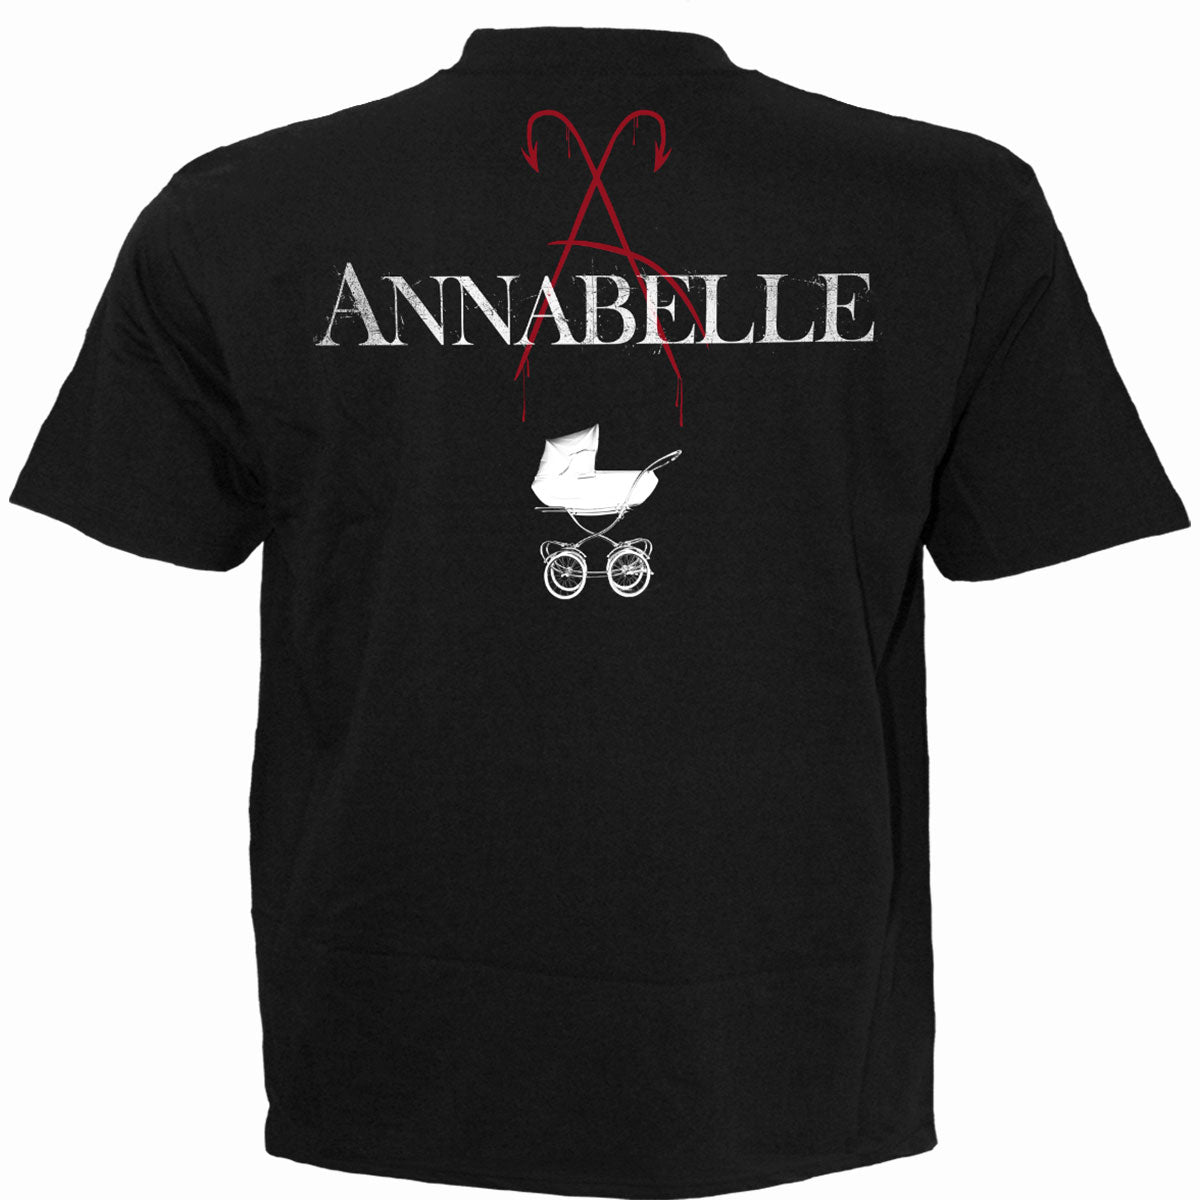 ANNABELLE - FOUND YOU - T-Shirt noir